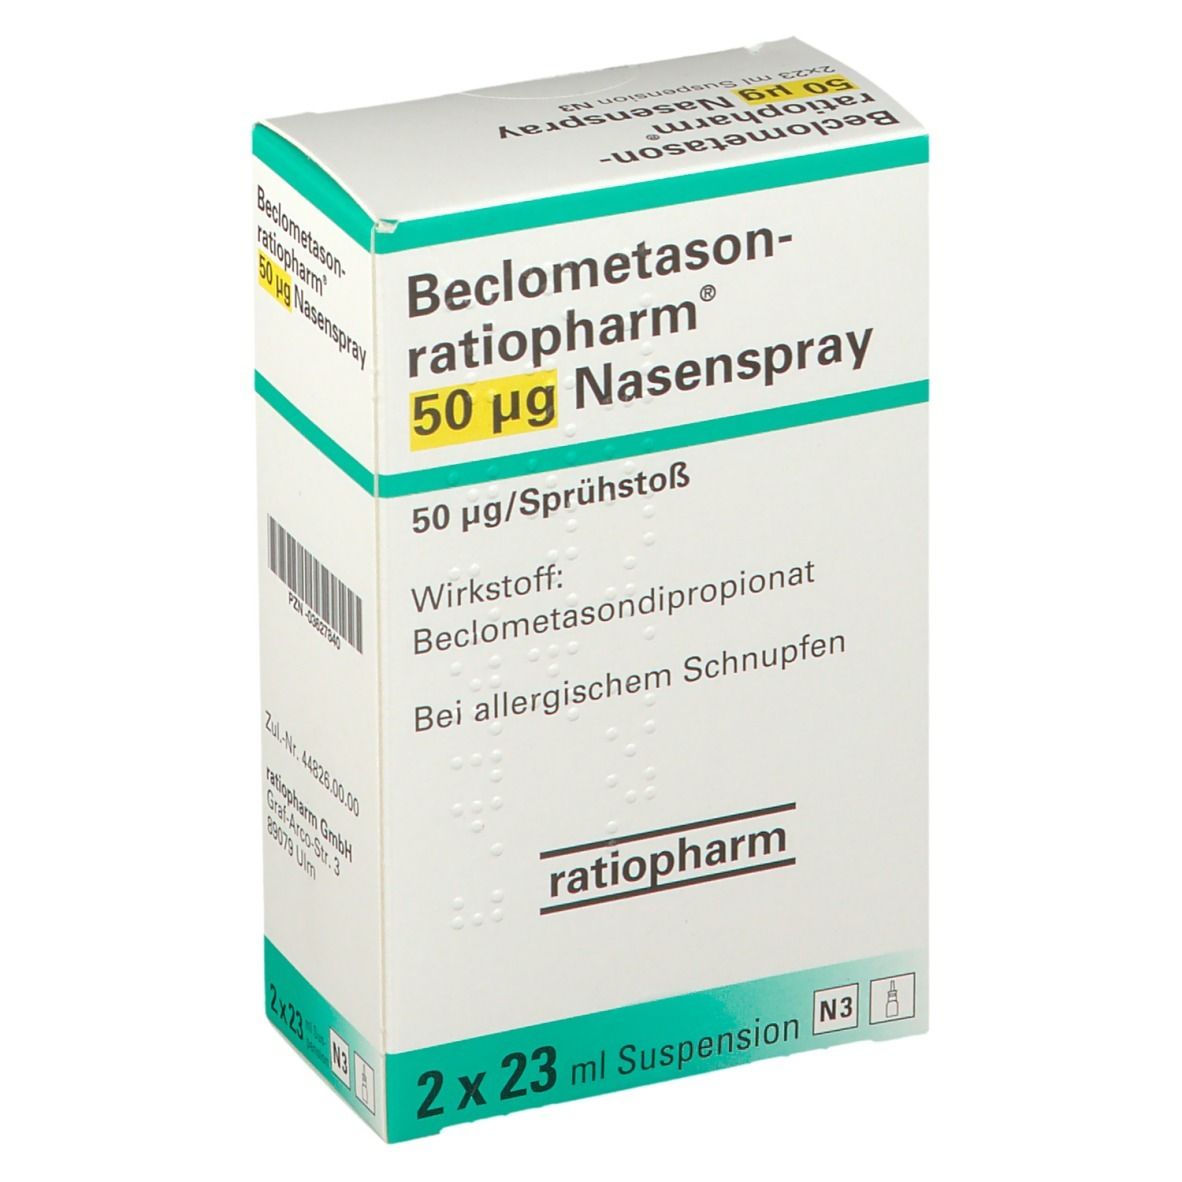 Beclometason-ratiopharm® 50 µg